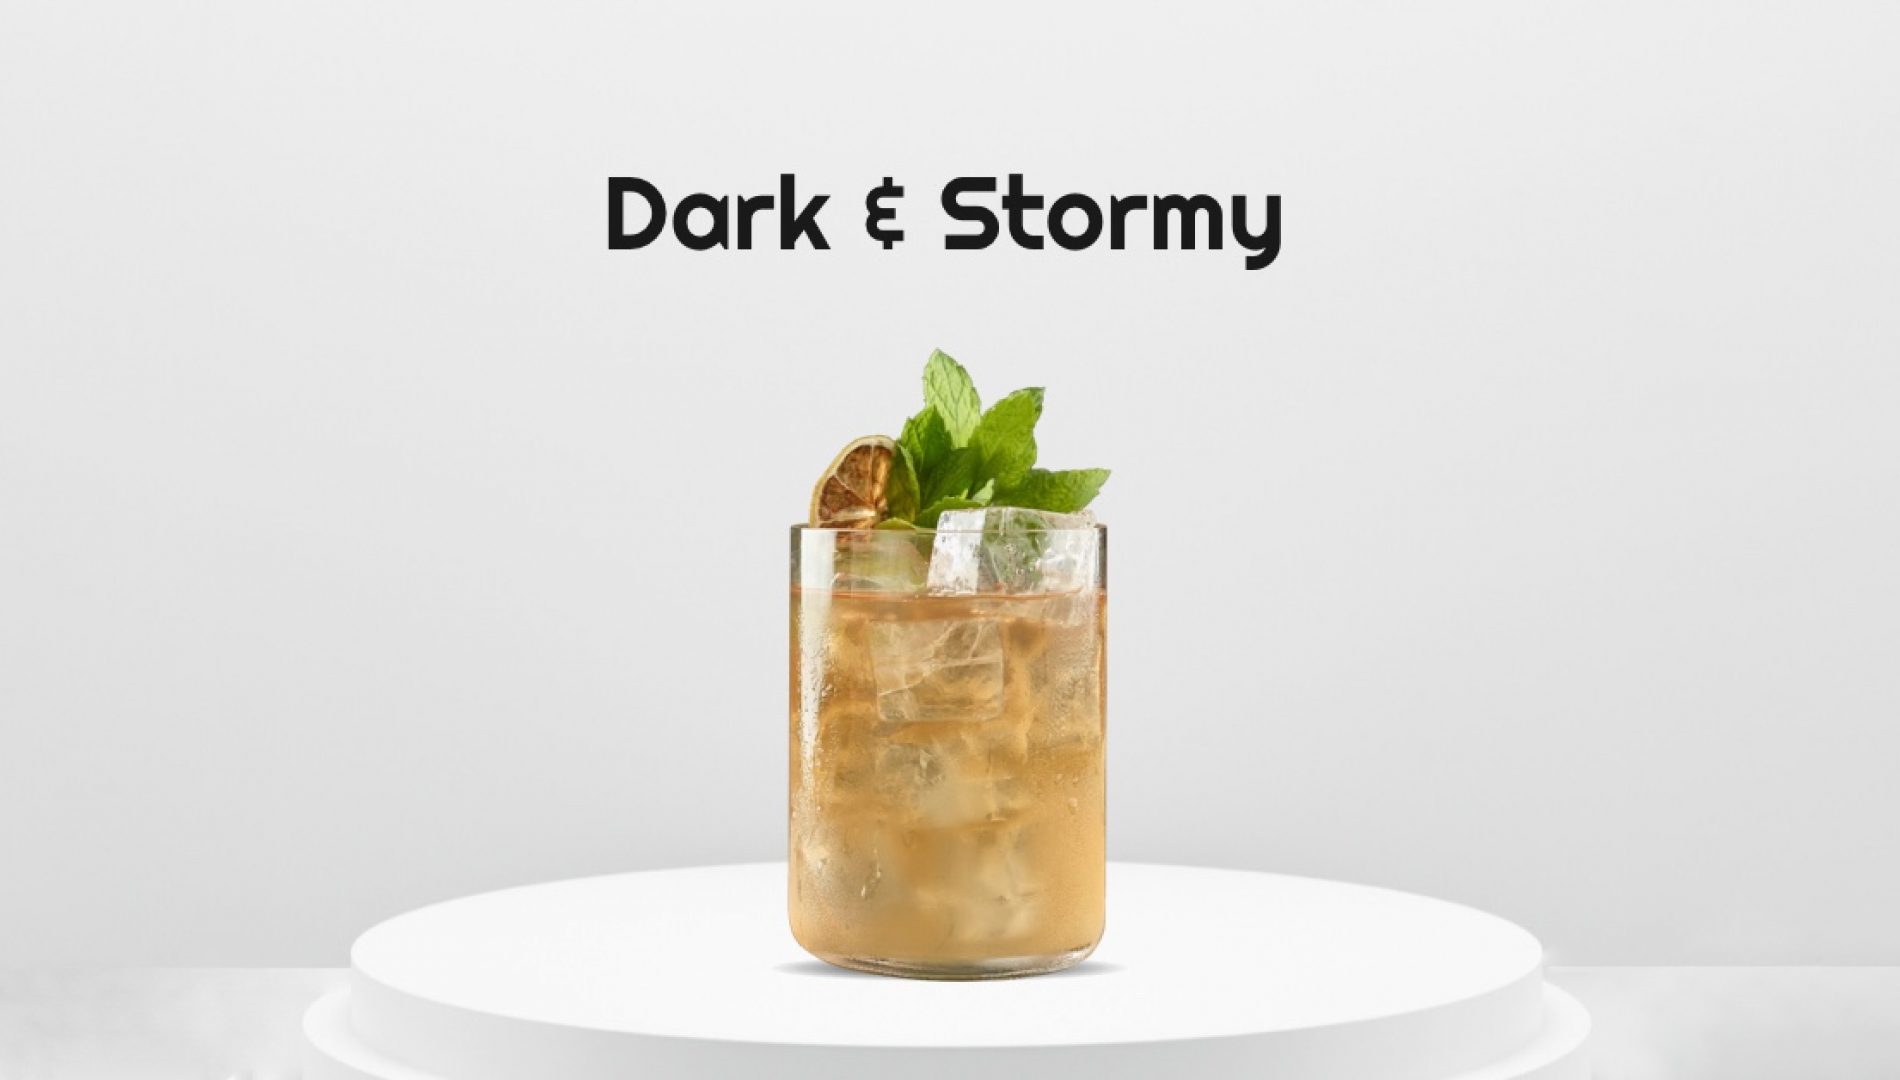 Craftails cocktails I De Dark & Stormy